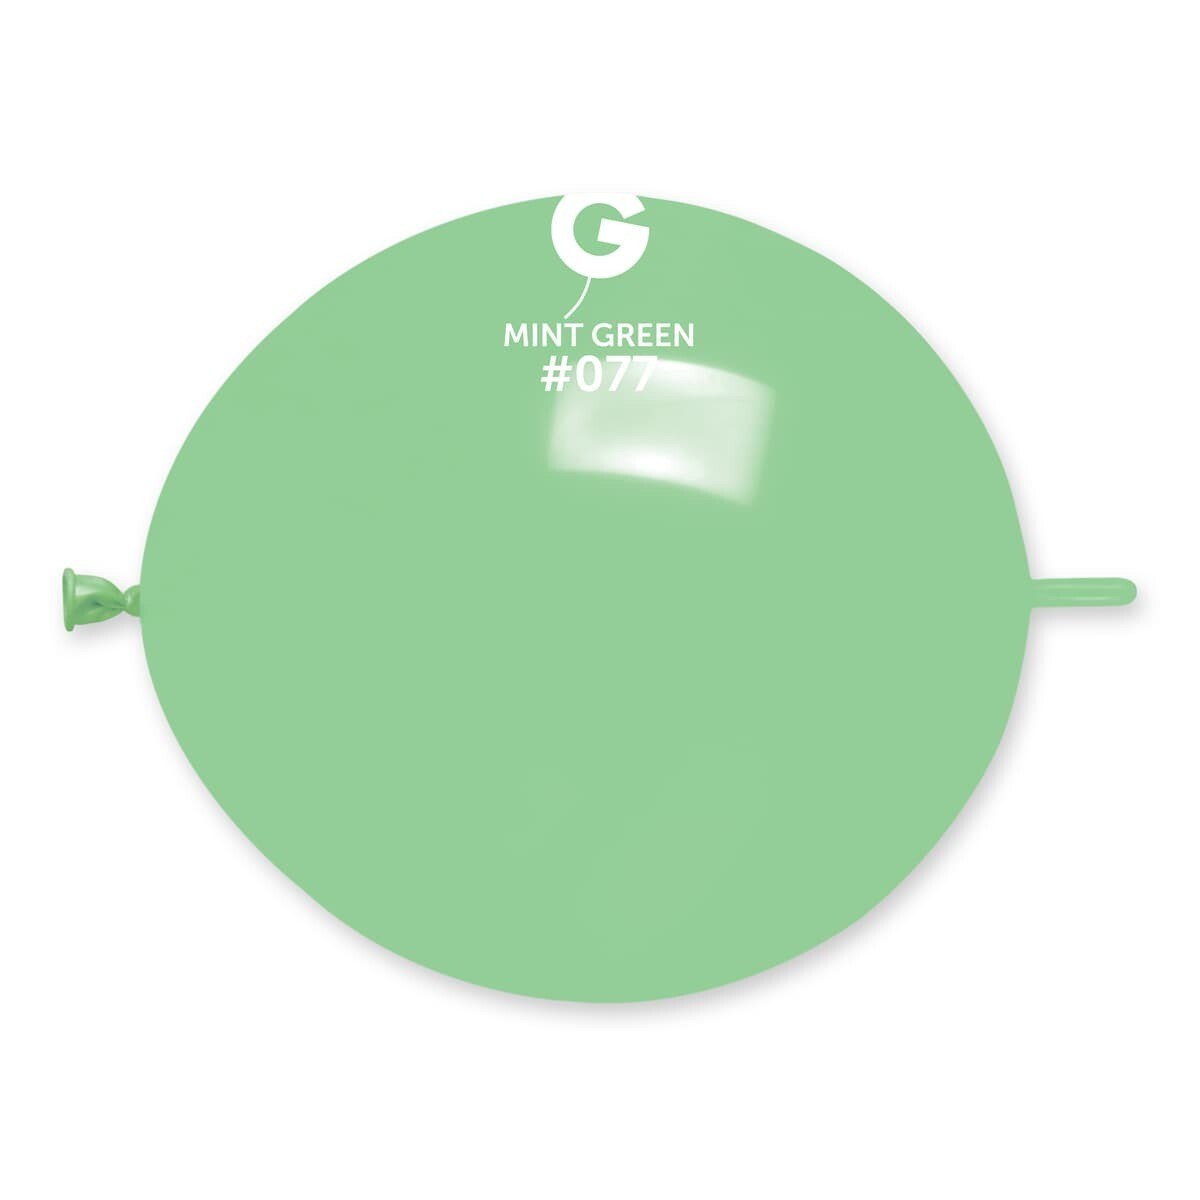 GL13: #077 Mint Green 137705 - 13 in